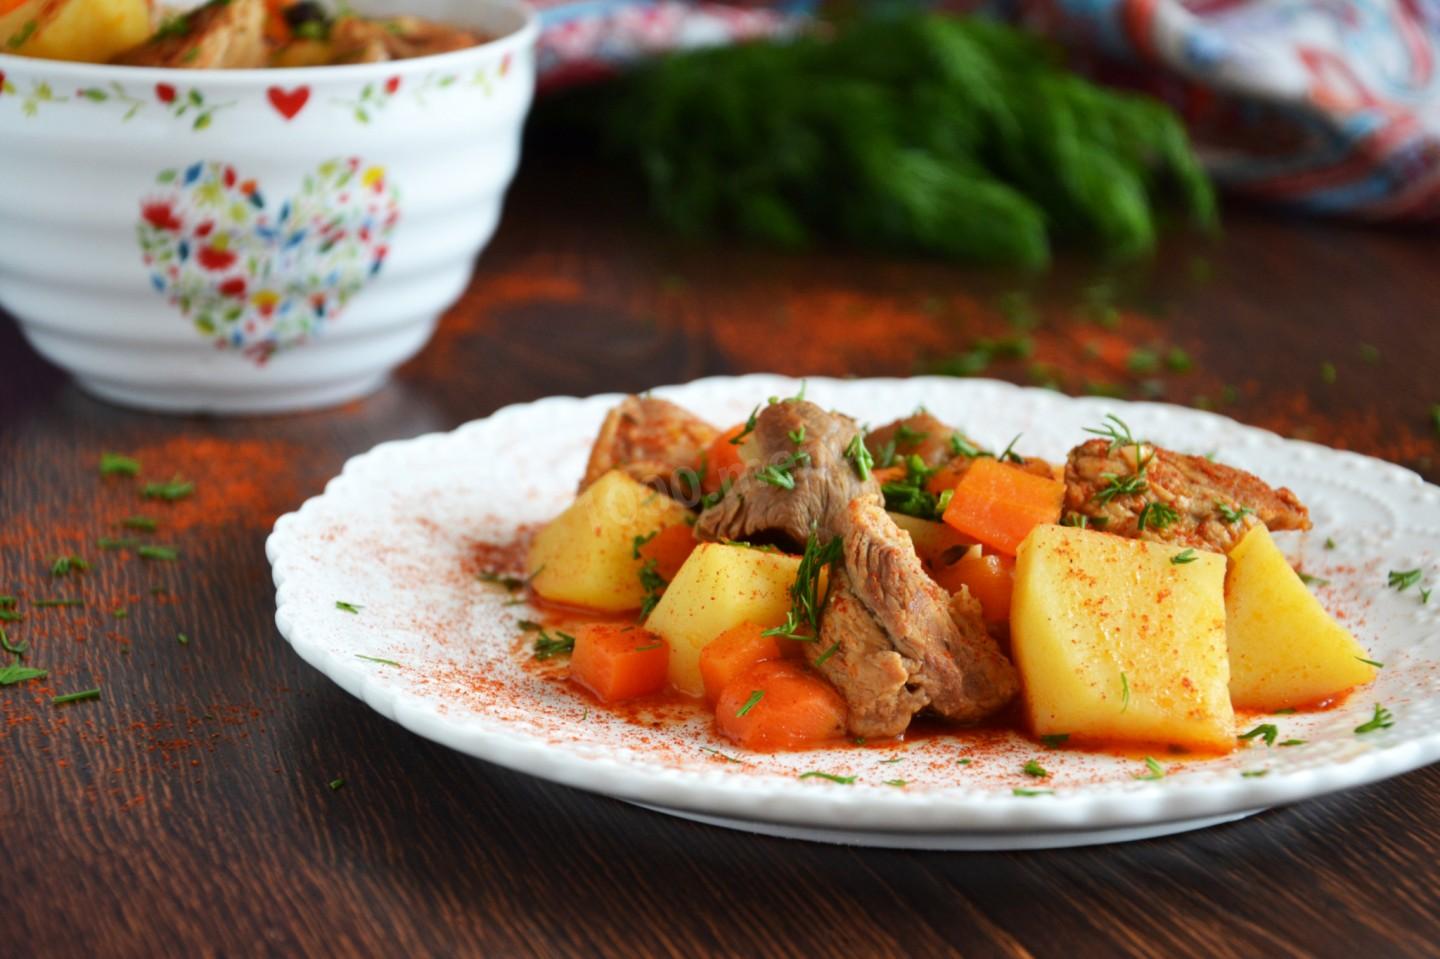 Тушеная картошка с мясом в кастрюле пошаговый рецепт с фото пошагово на плите